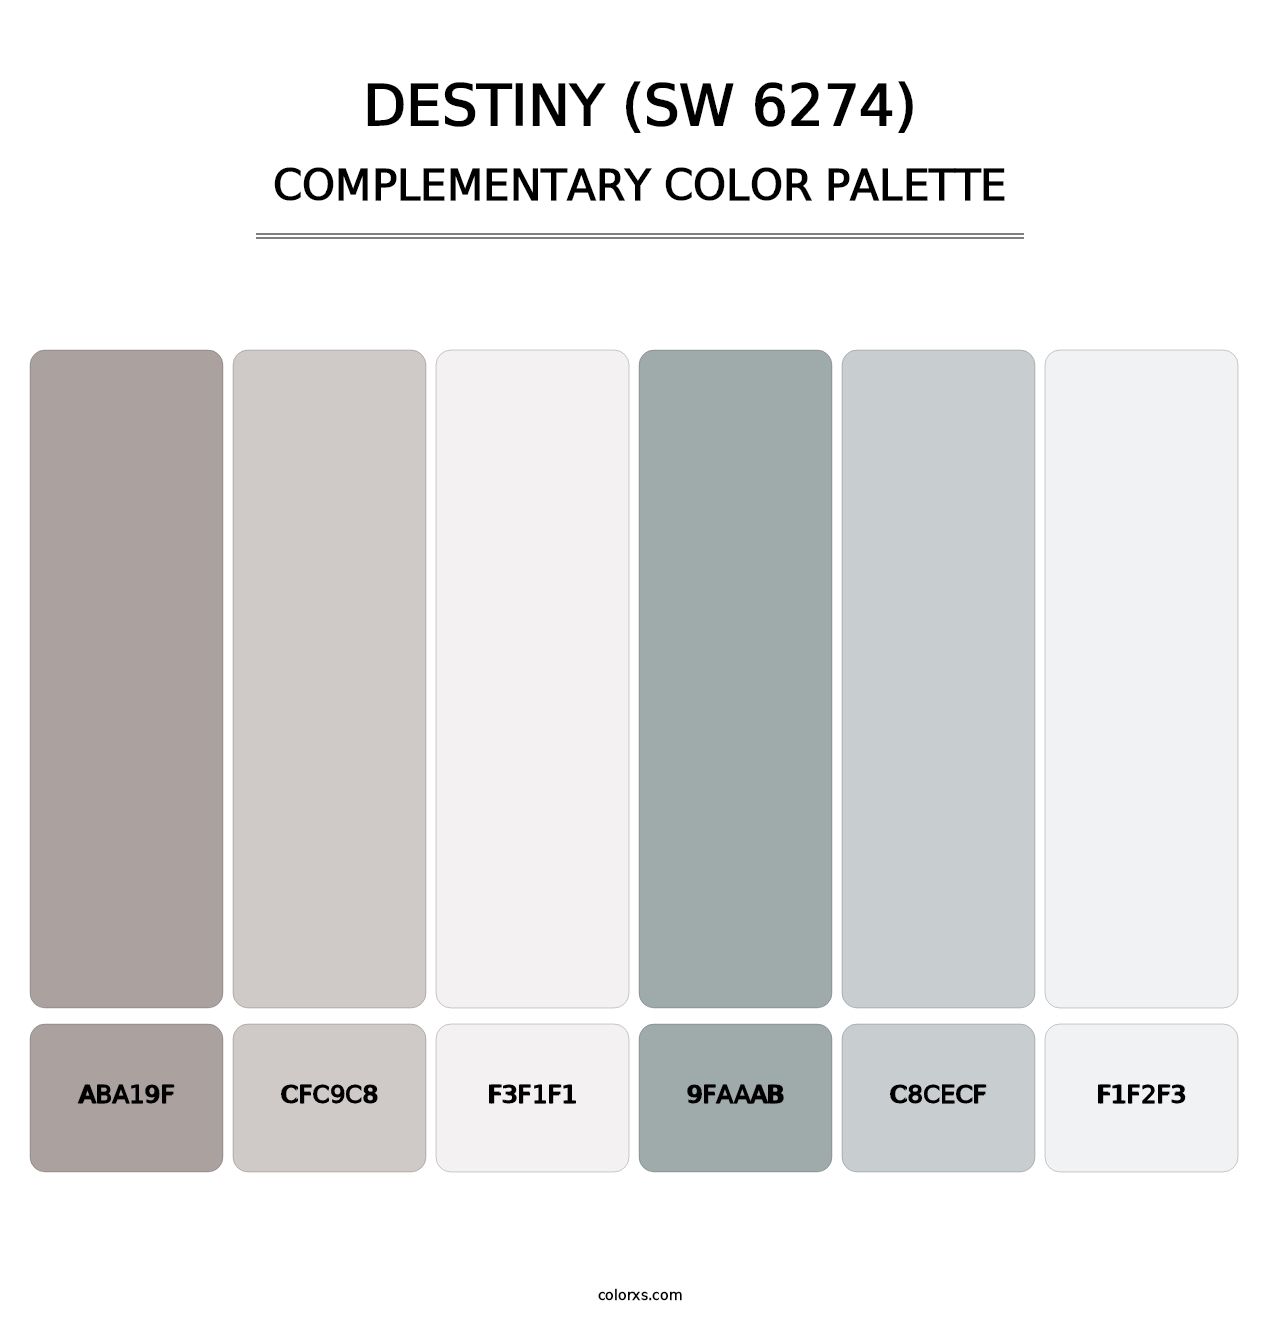 Destiny (SW 6274) - Complementary Color Palette